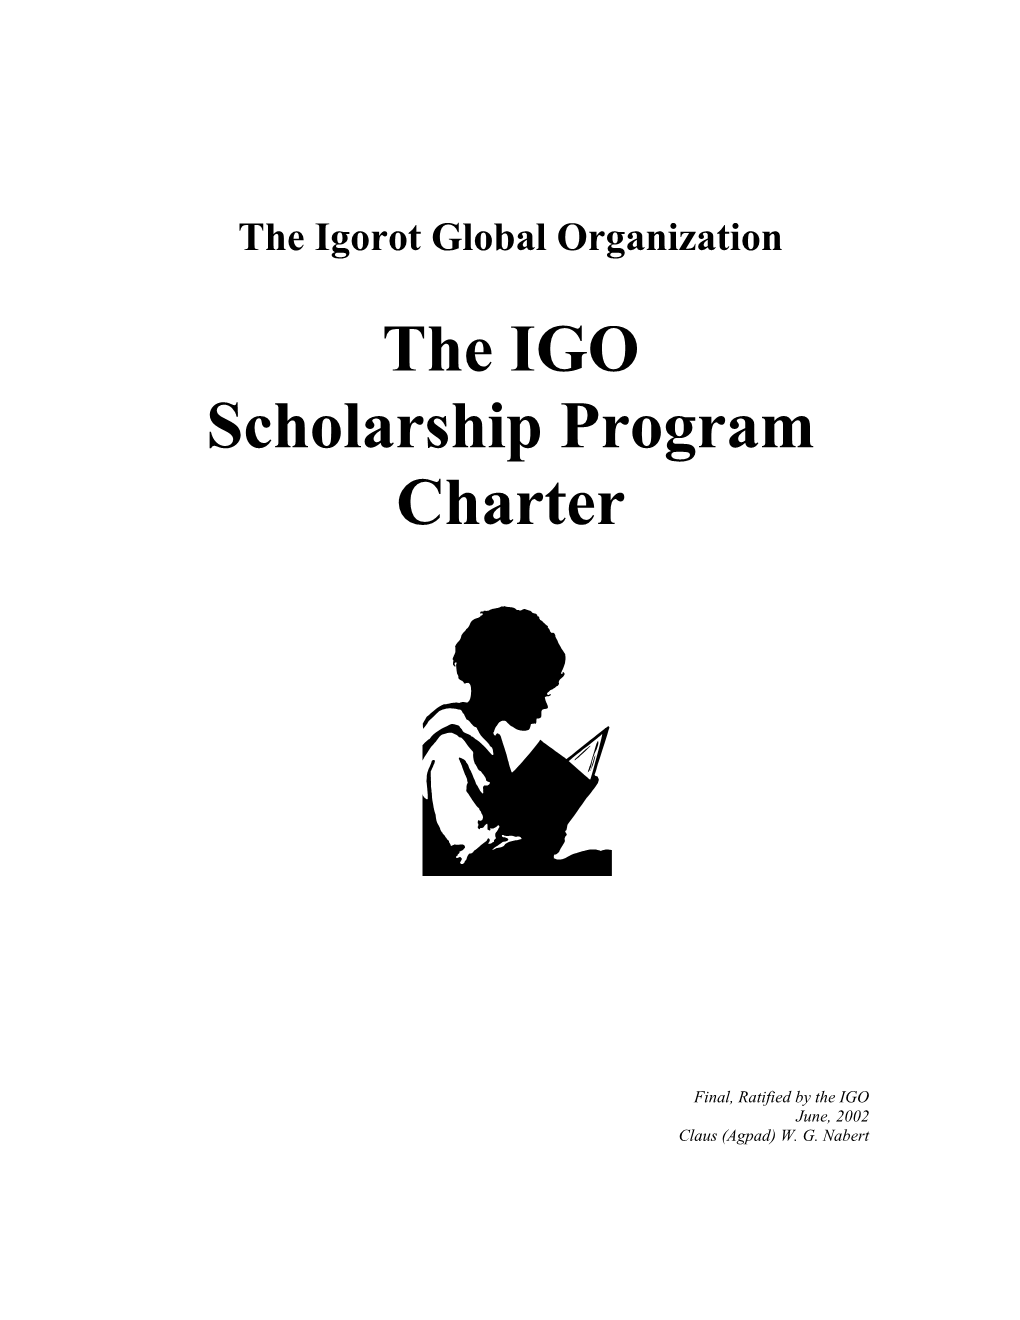 The IGO Scholarship Program